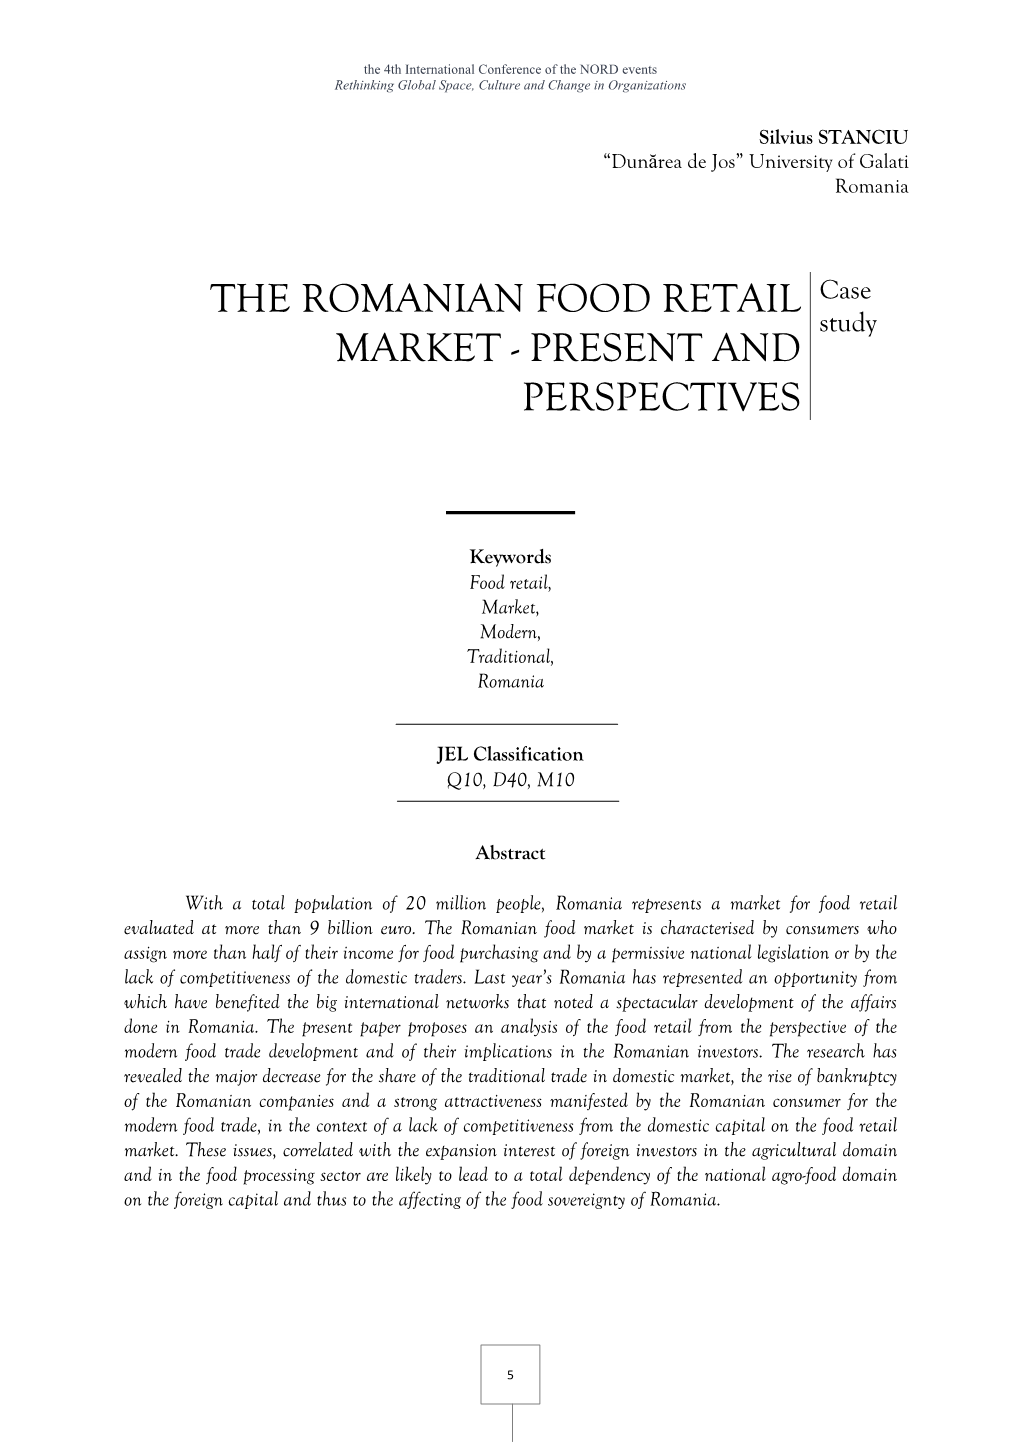 The Romanian Food Retail Market